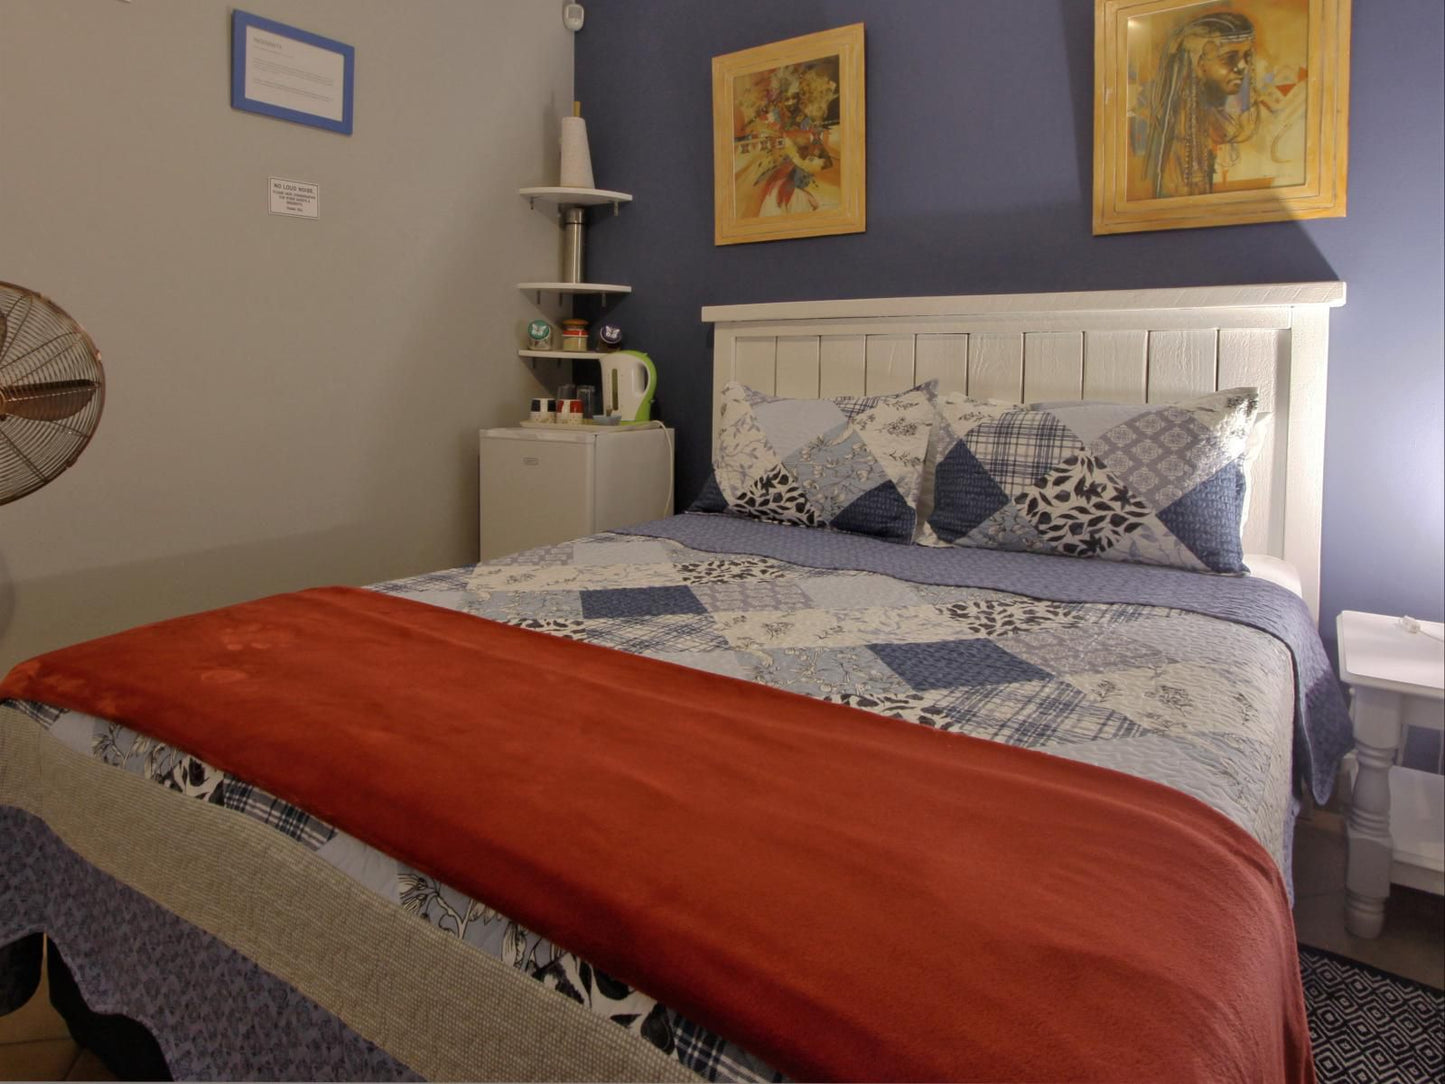 Tuksumduin Guesthouse Ballito Kwazulu Natal South Africa Bedroom